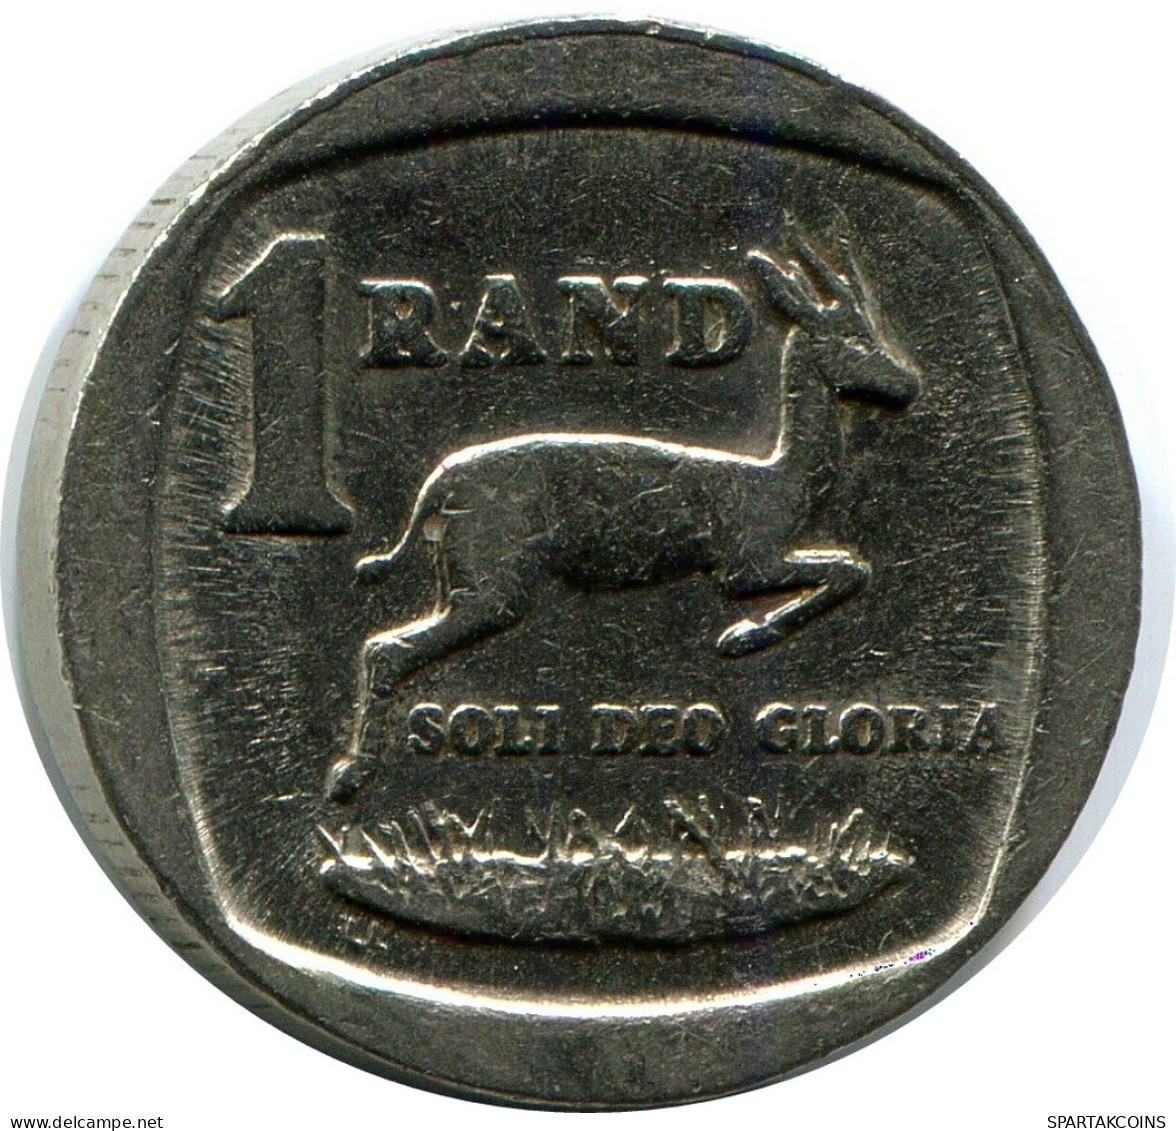 1 RAND 1994 SÜDAFRIKA SOUTH AFRICA Münze #AP940.D.A - Afrique Du Sud